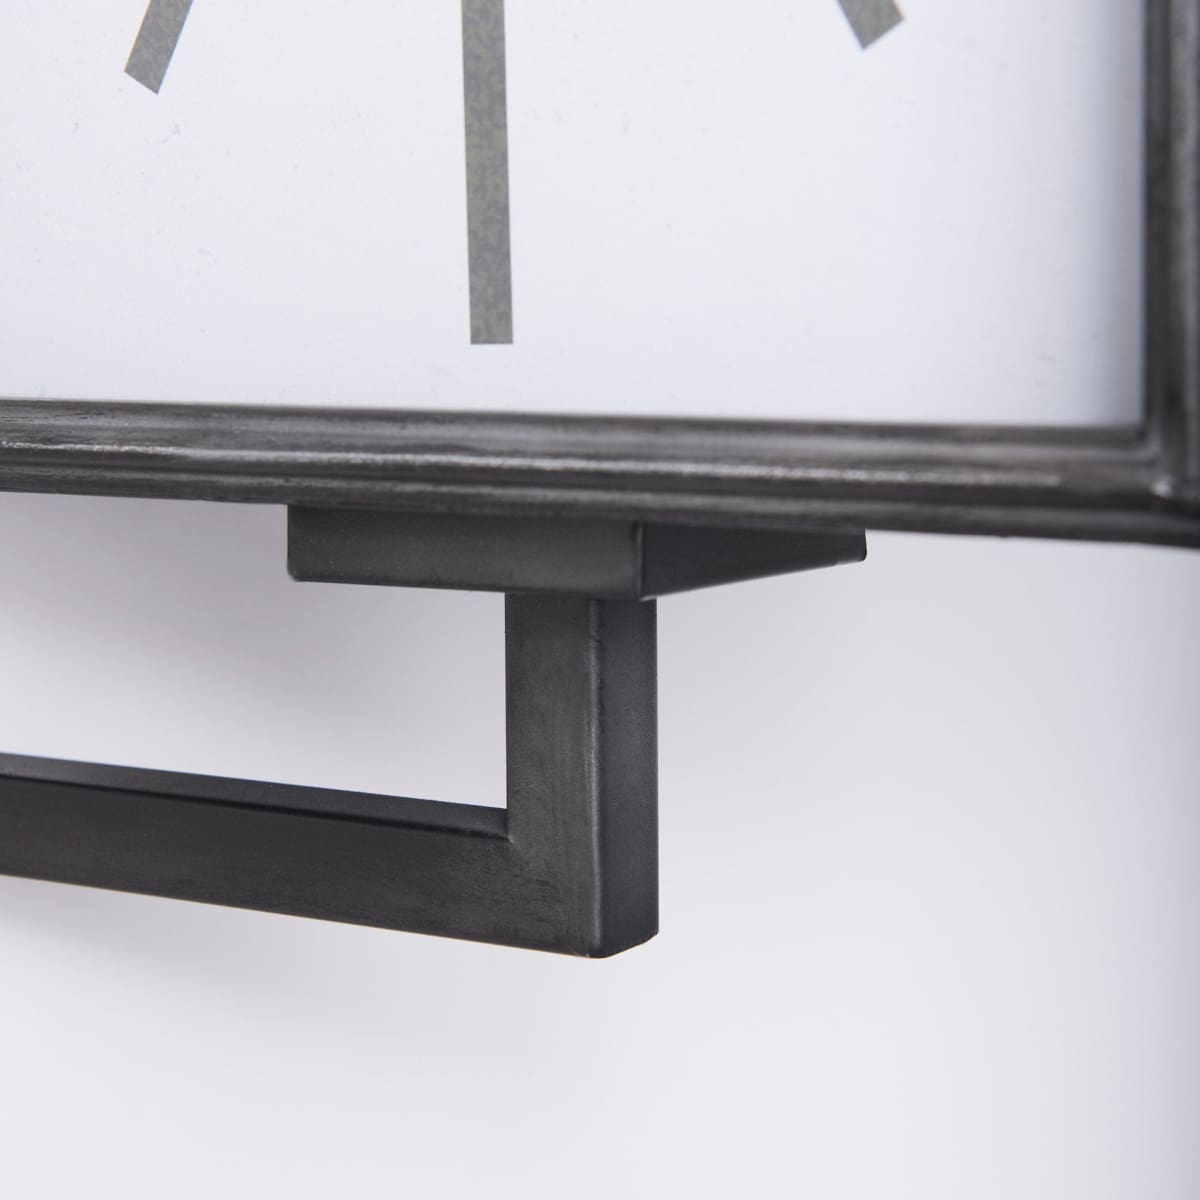 Hagar Wall Clock Gray Metal - wall-clocks